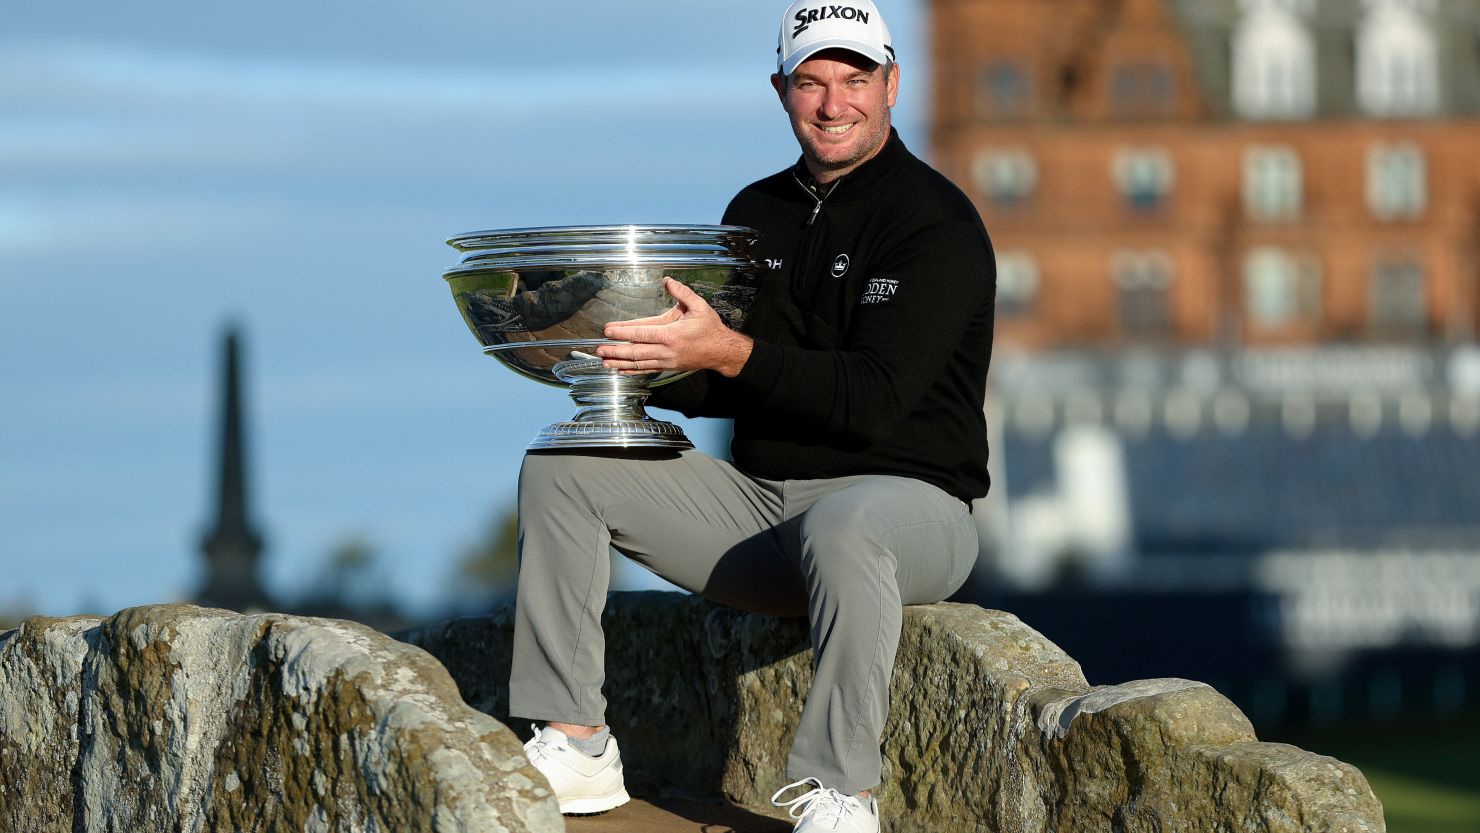 European Tour winner to play in New Zealand Open - PGA of Australia